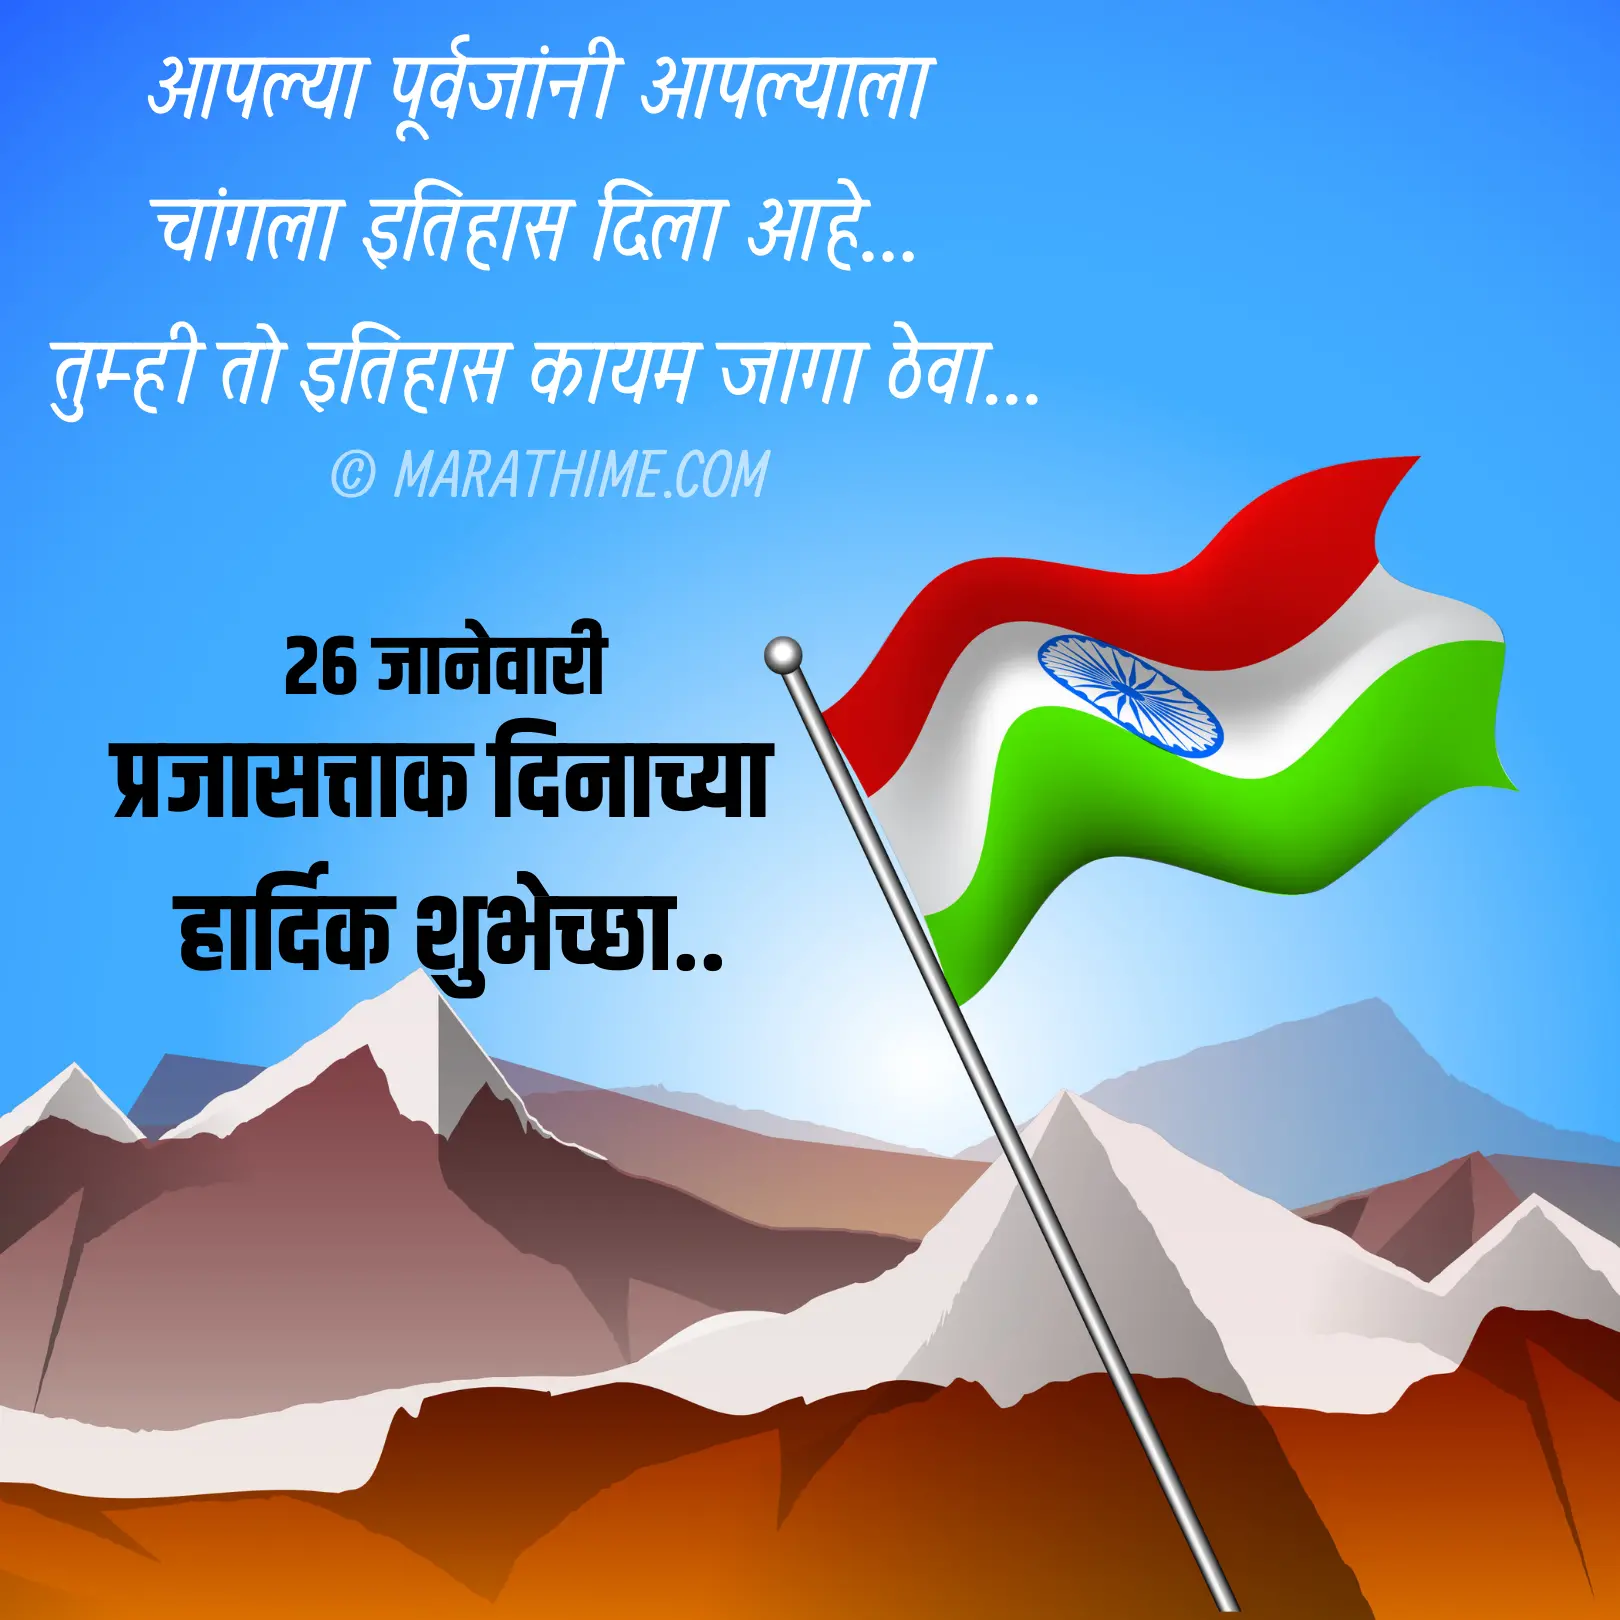 प्रजासत्ताक दिन शुभेच्छा-republic day quotes in marathi (15)